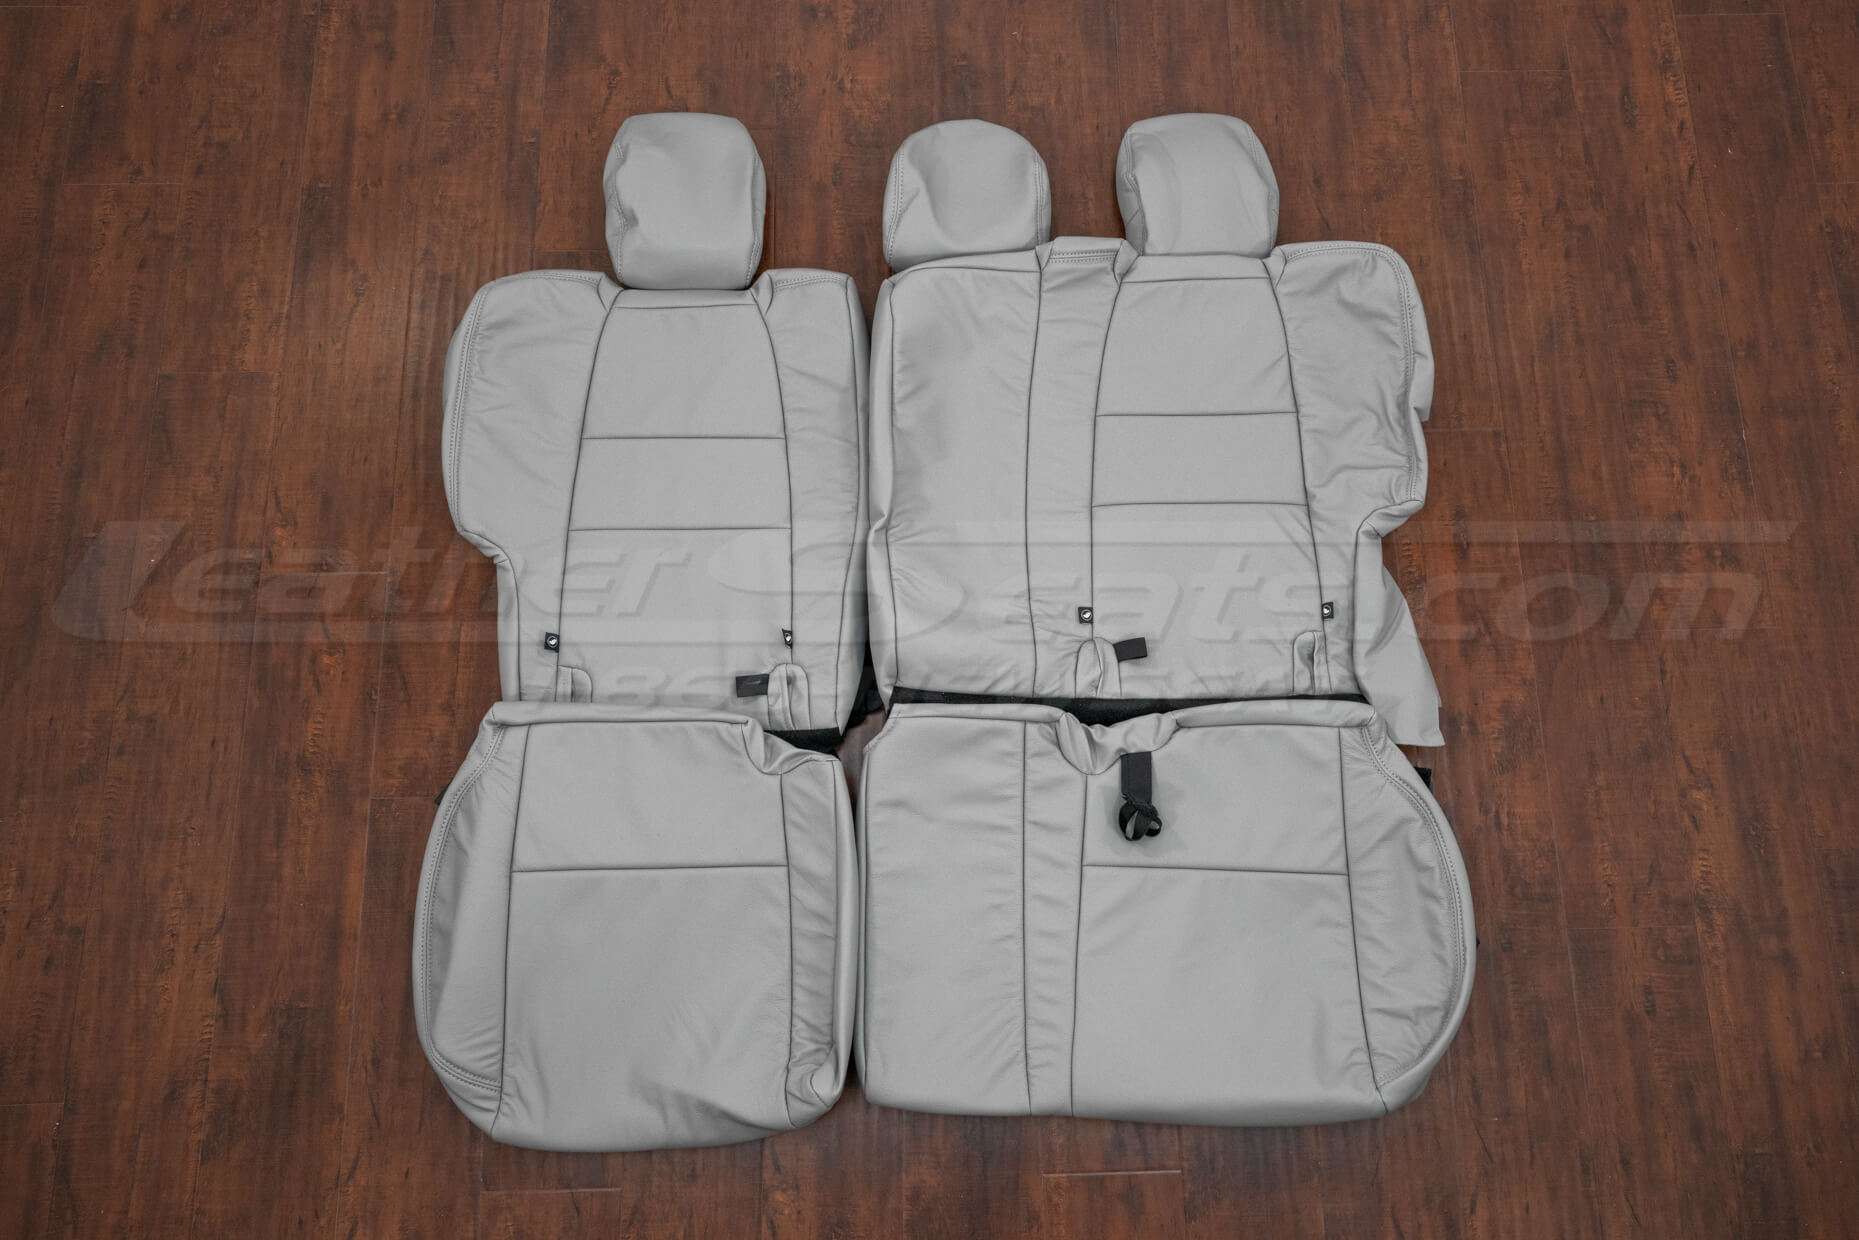 Honda HR-V Leather Kit - Ash - Rear seat upholstery